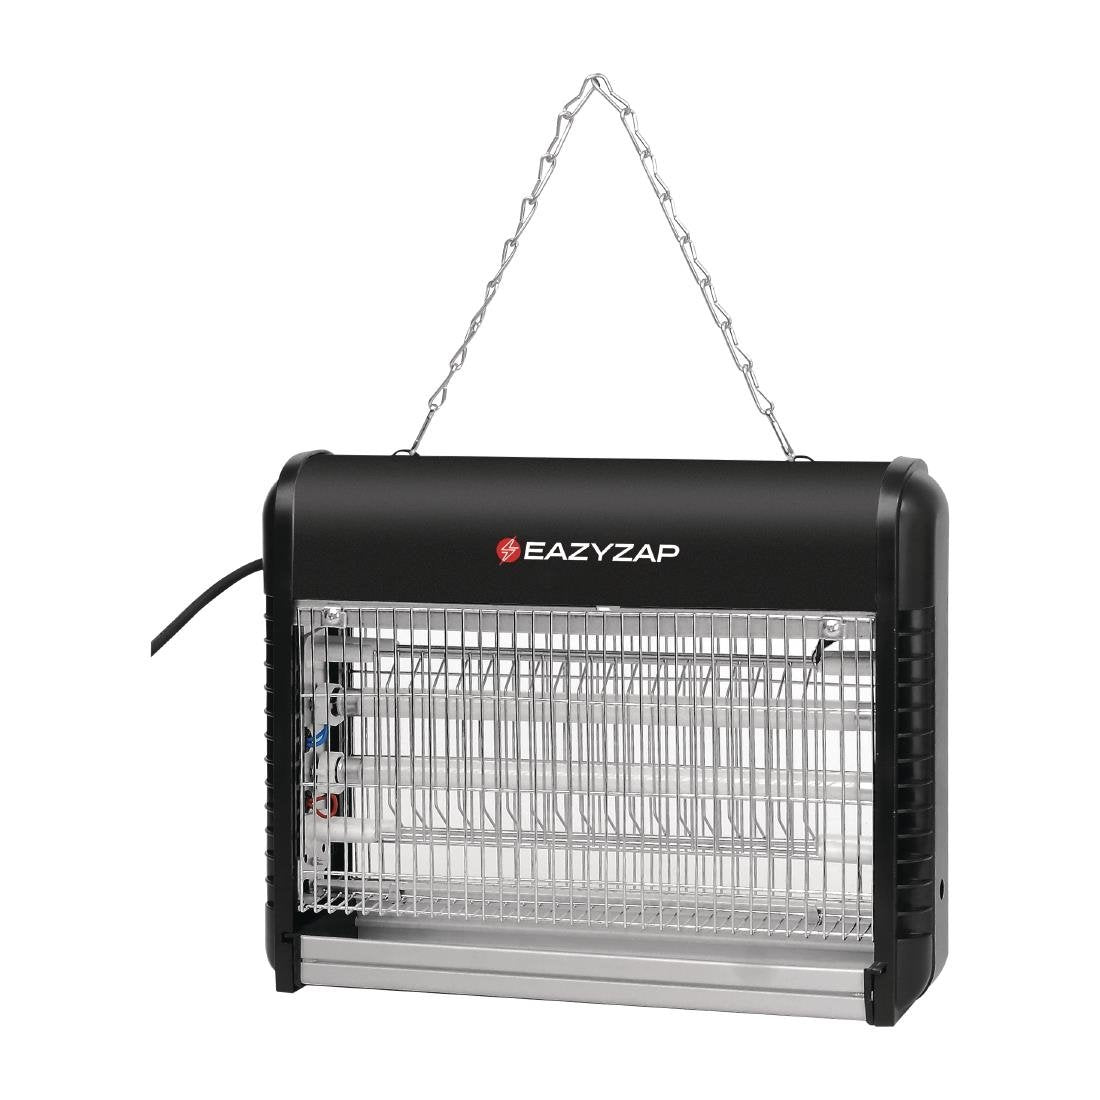 Eazyzap Energy Efficient LED Fly Killer 9W.Product ref:00206.